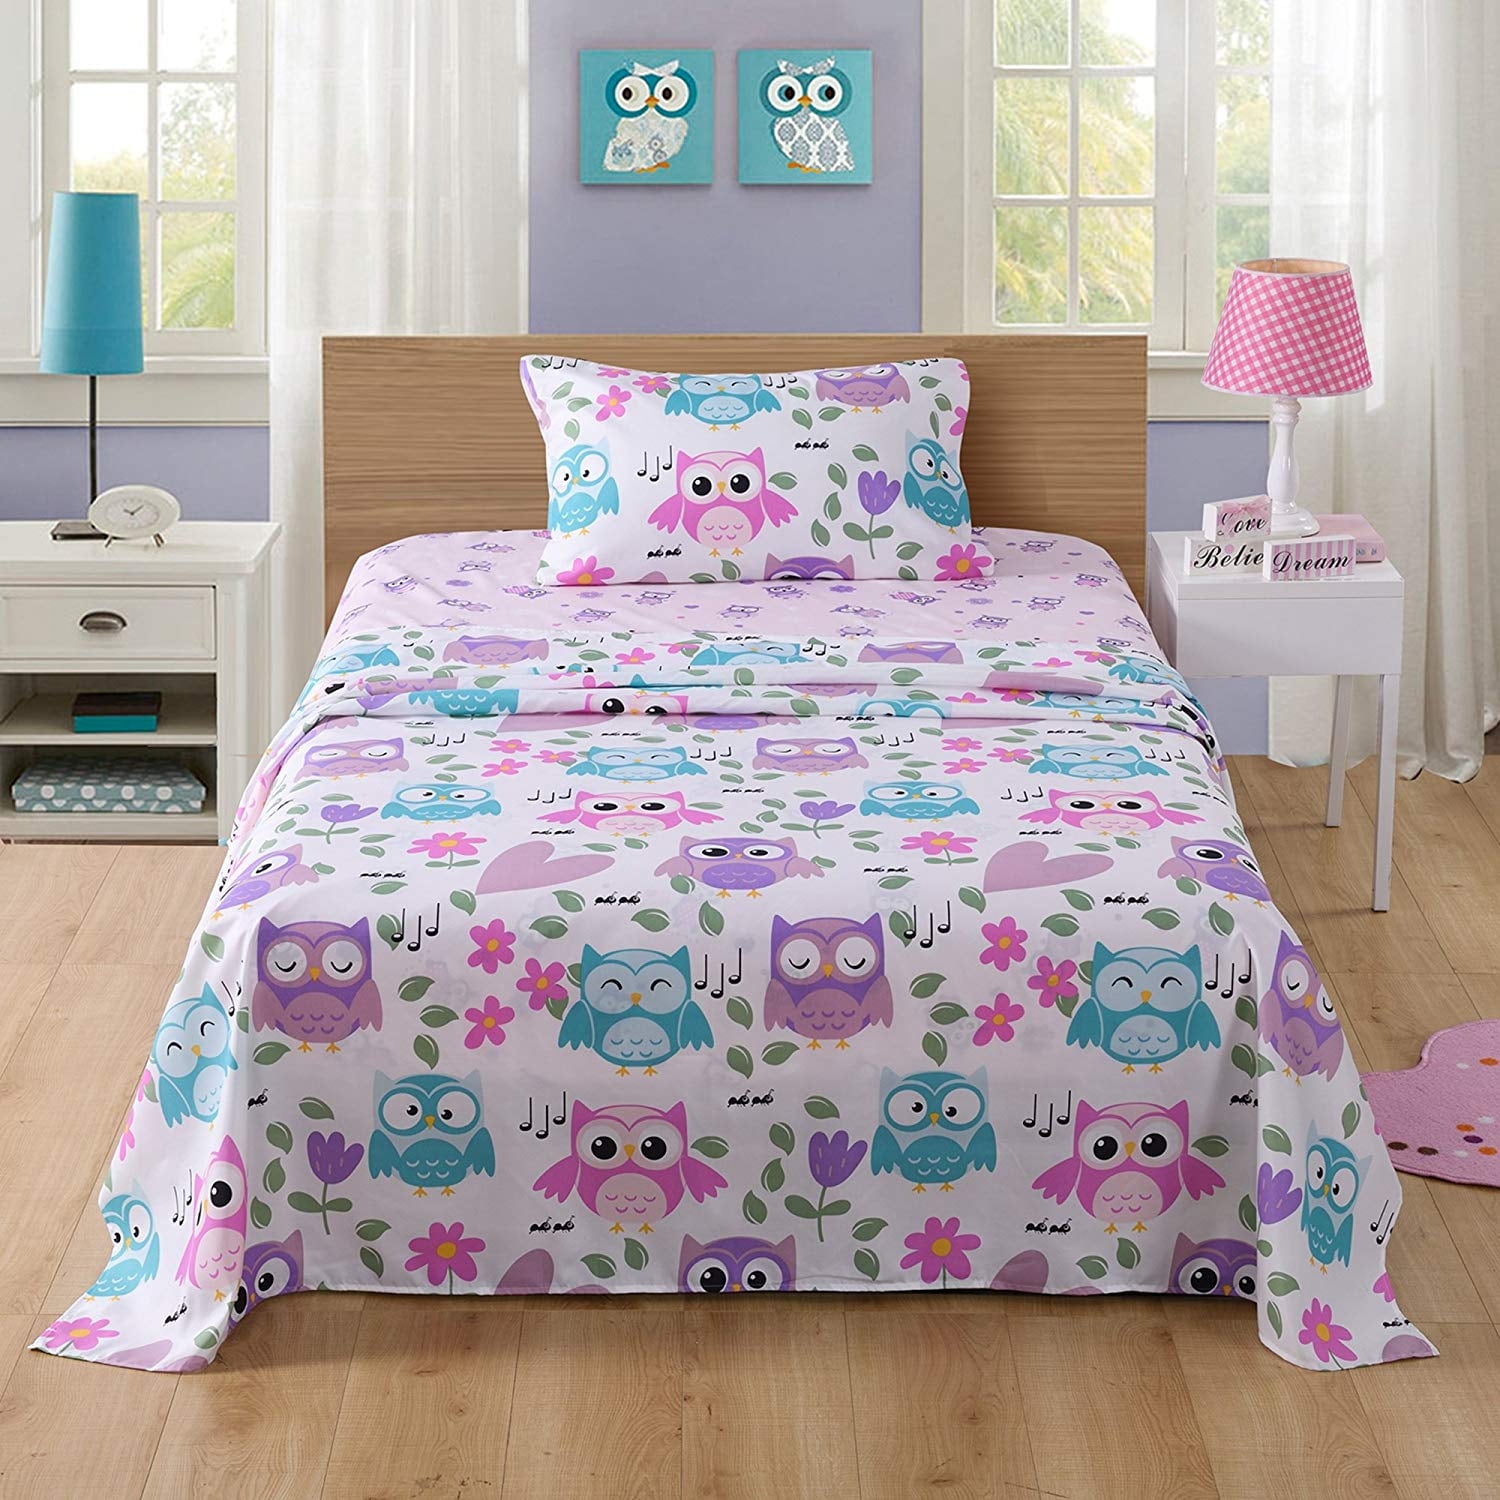 Elephant Sheet Bed Sheets for Kids Girls Boys Teens Children Beds Set 